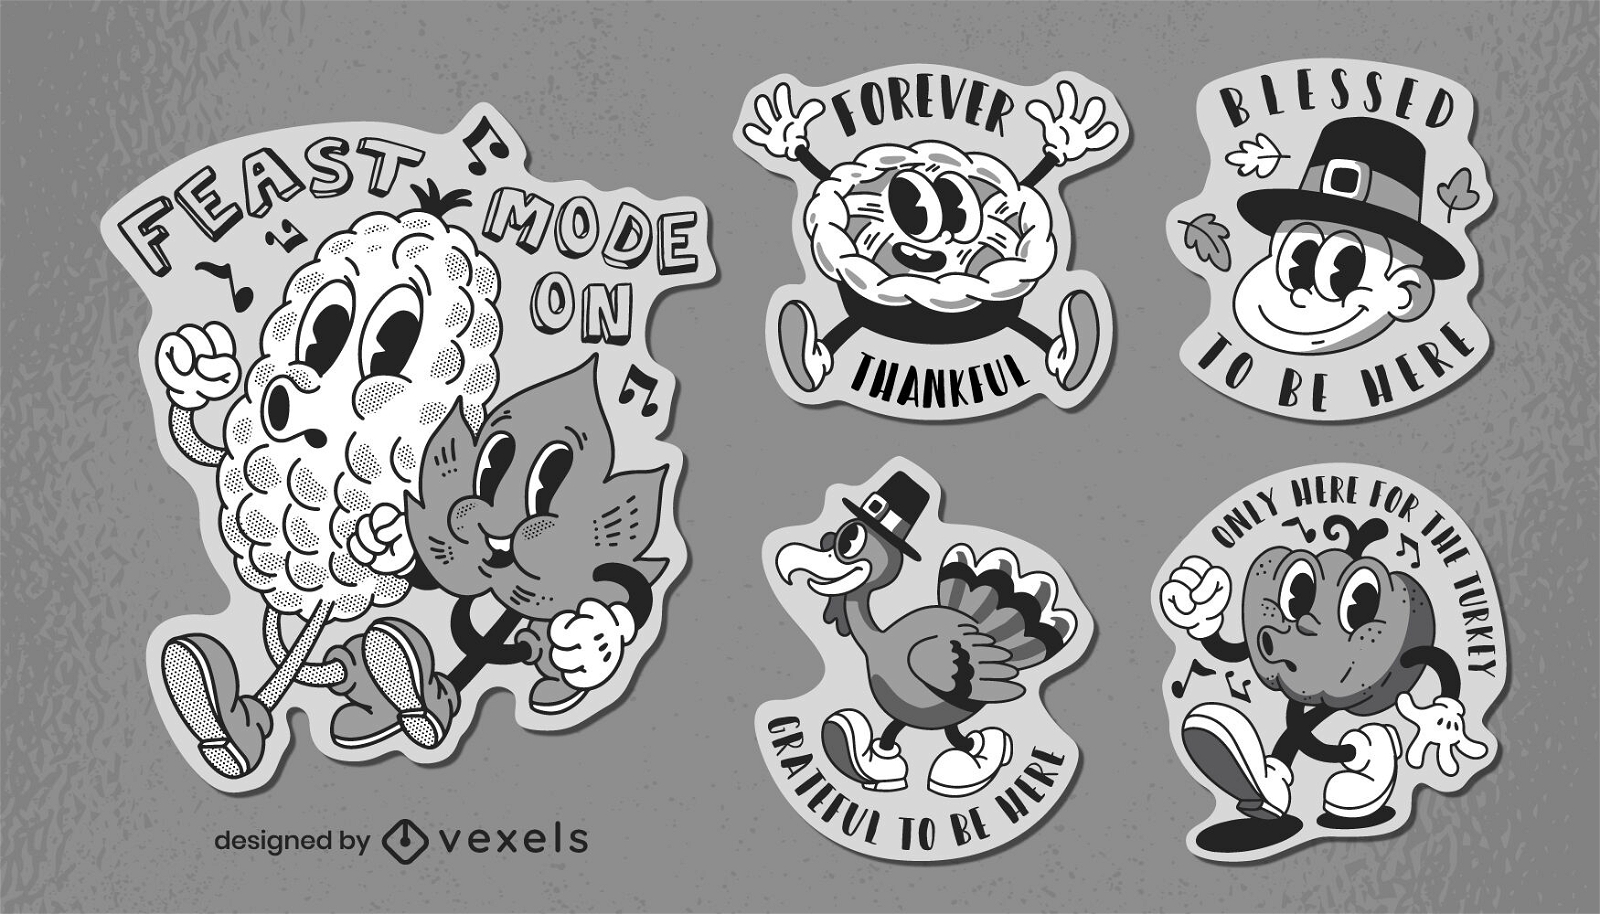 https://images.vexels.com/content/314694/preview/thanksgiving-retro-cartoon-stickers-set-e6883b.png